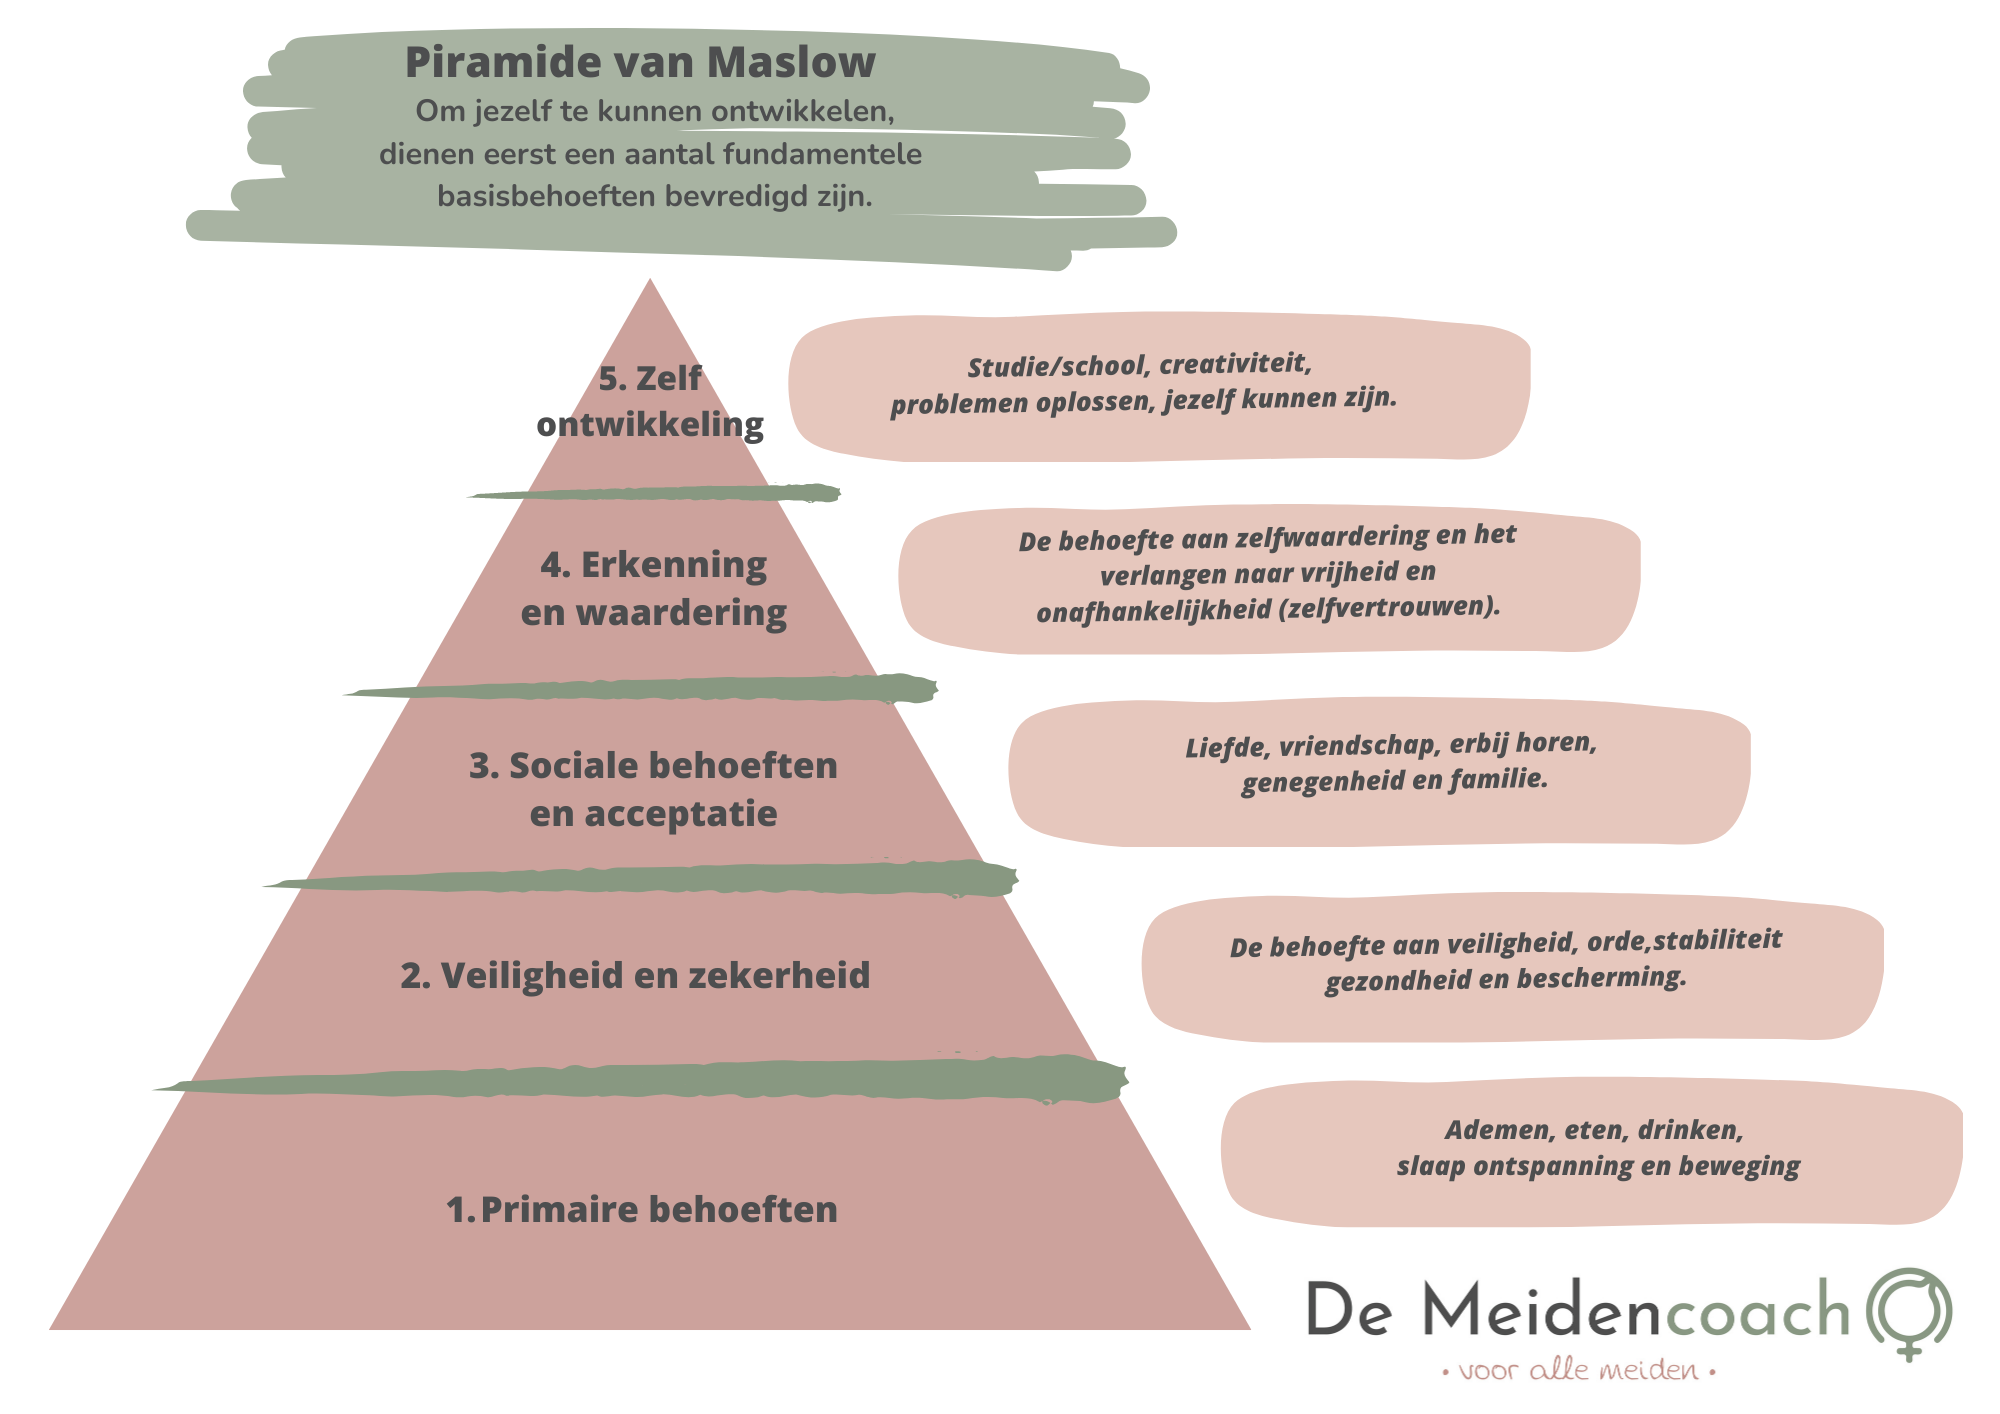 Piramide van Maslow